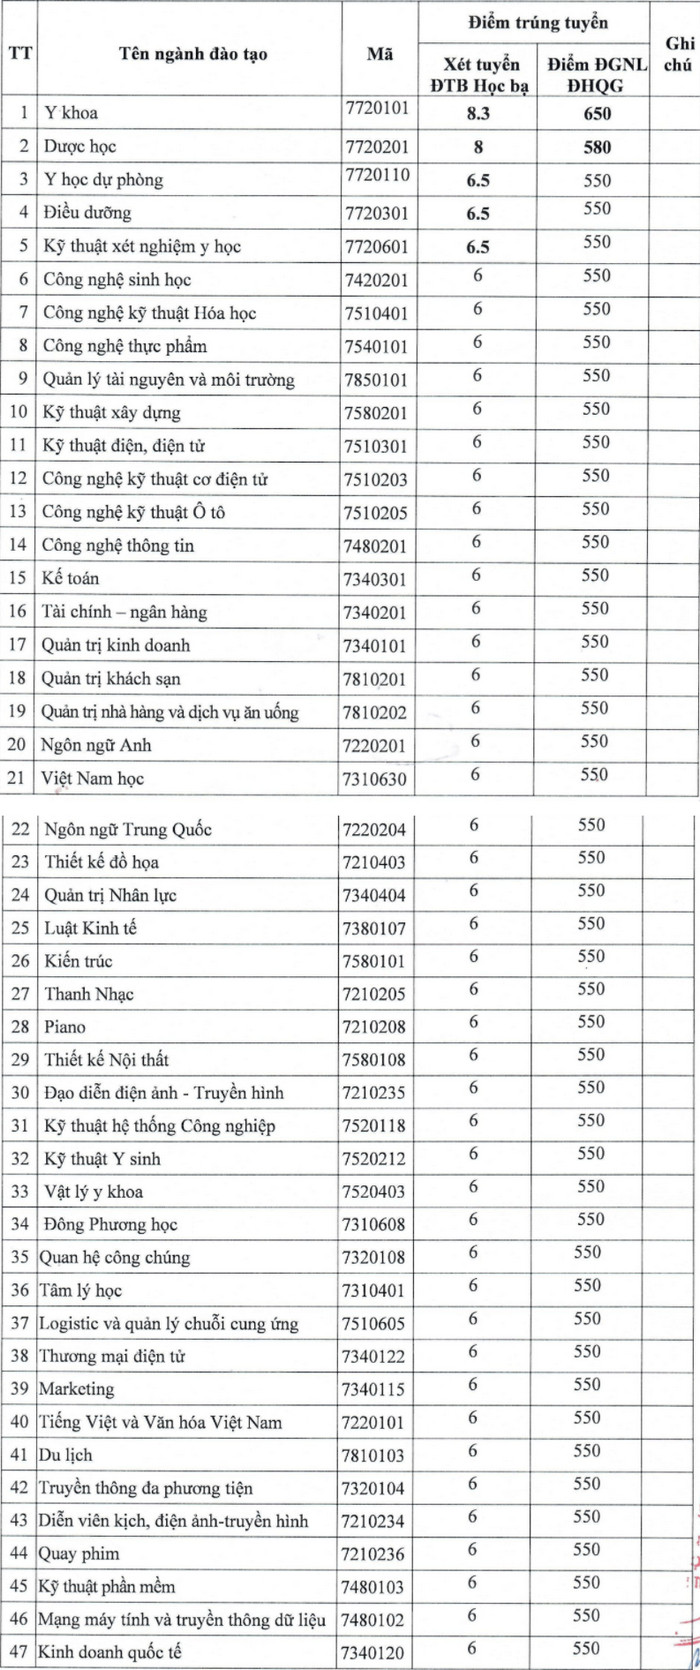 Diem chuan hoc ba va thi DGNL Dai hoc Nguyen Tat Thanh dot 3/2021